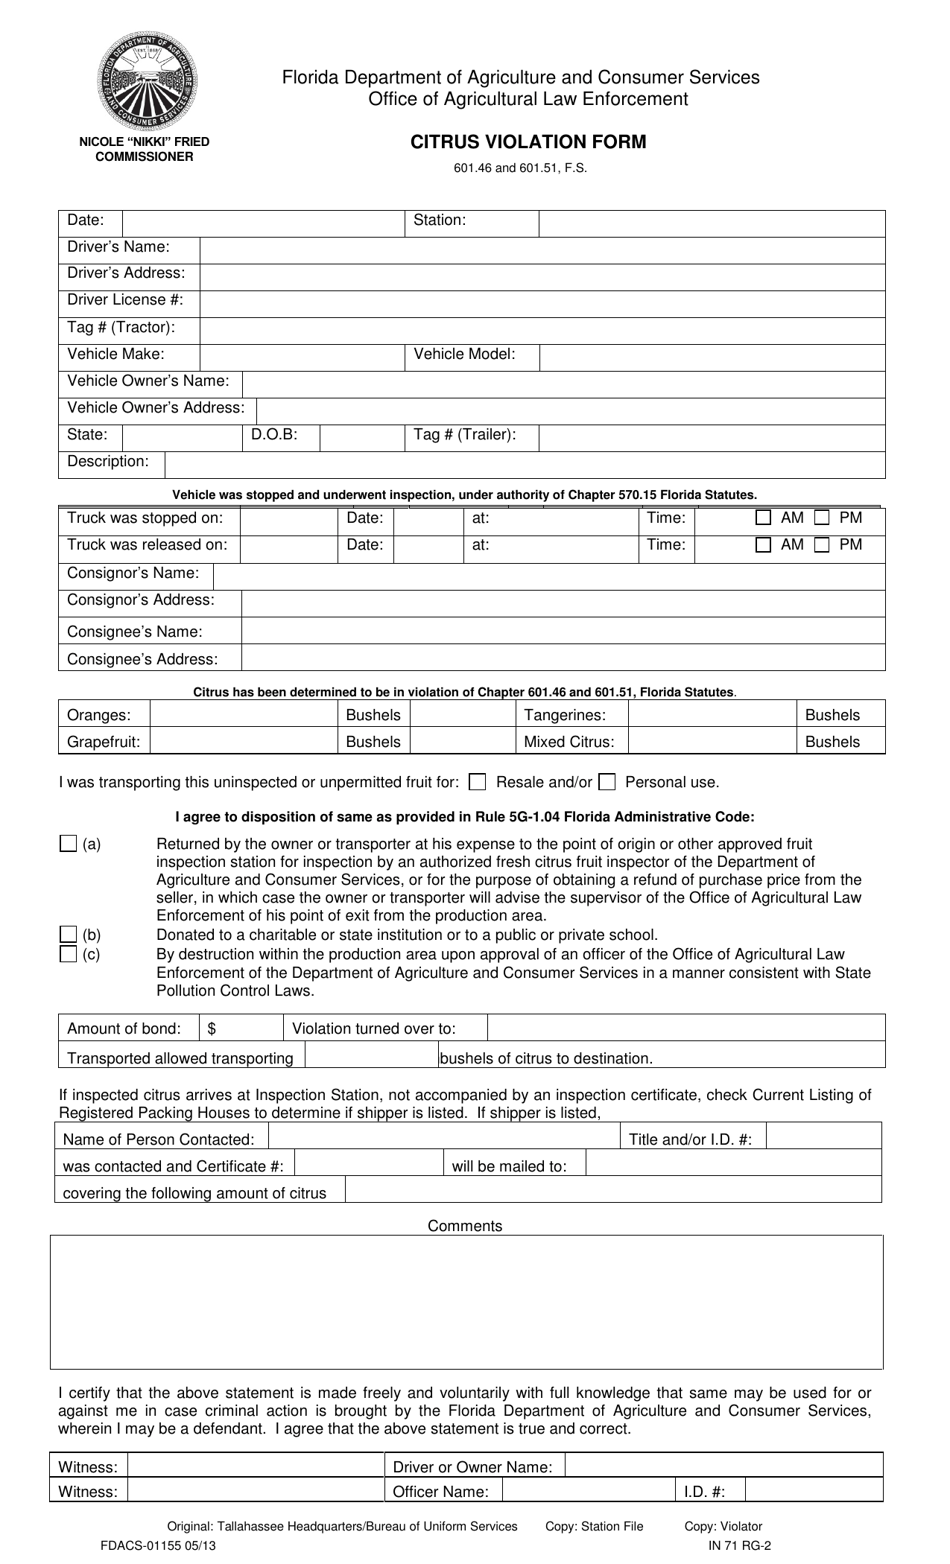 Form FDACS-01155 Citrus Violation Form - Florida, Page 1